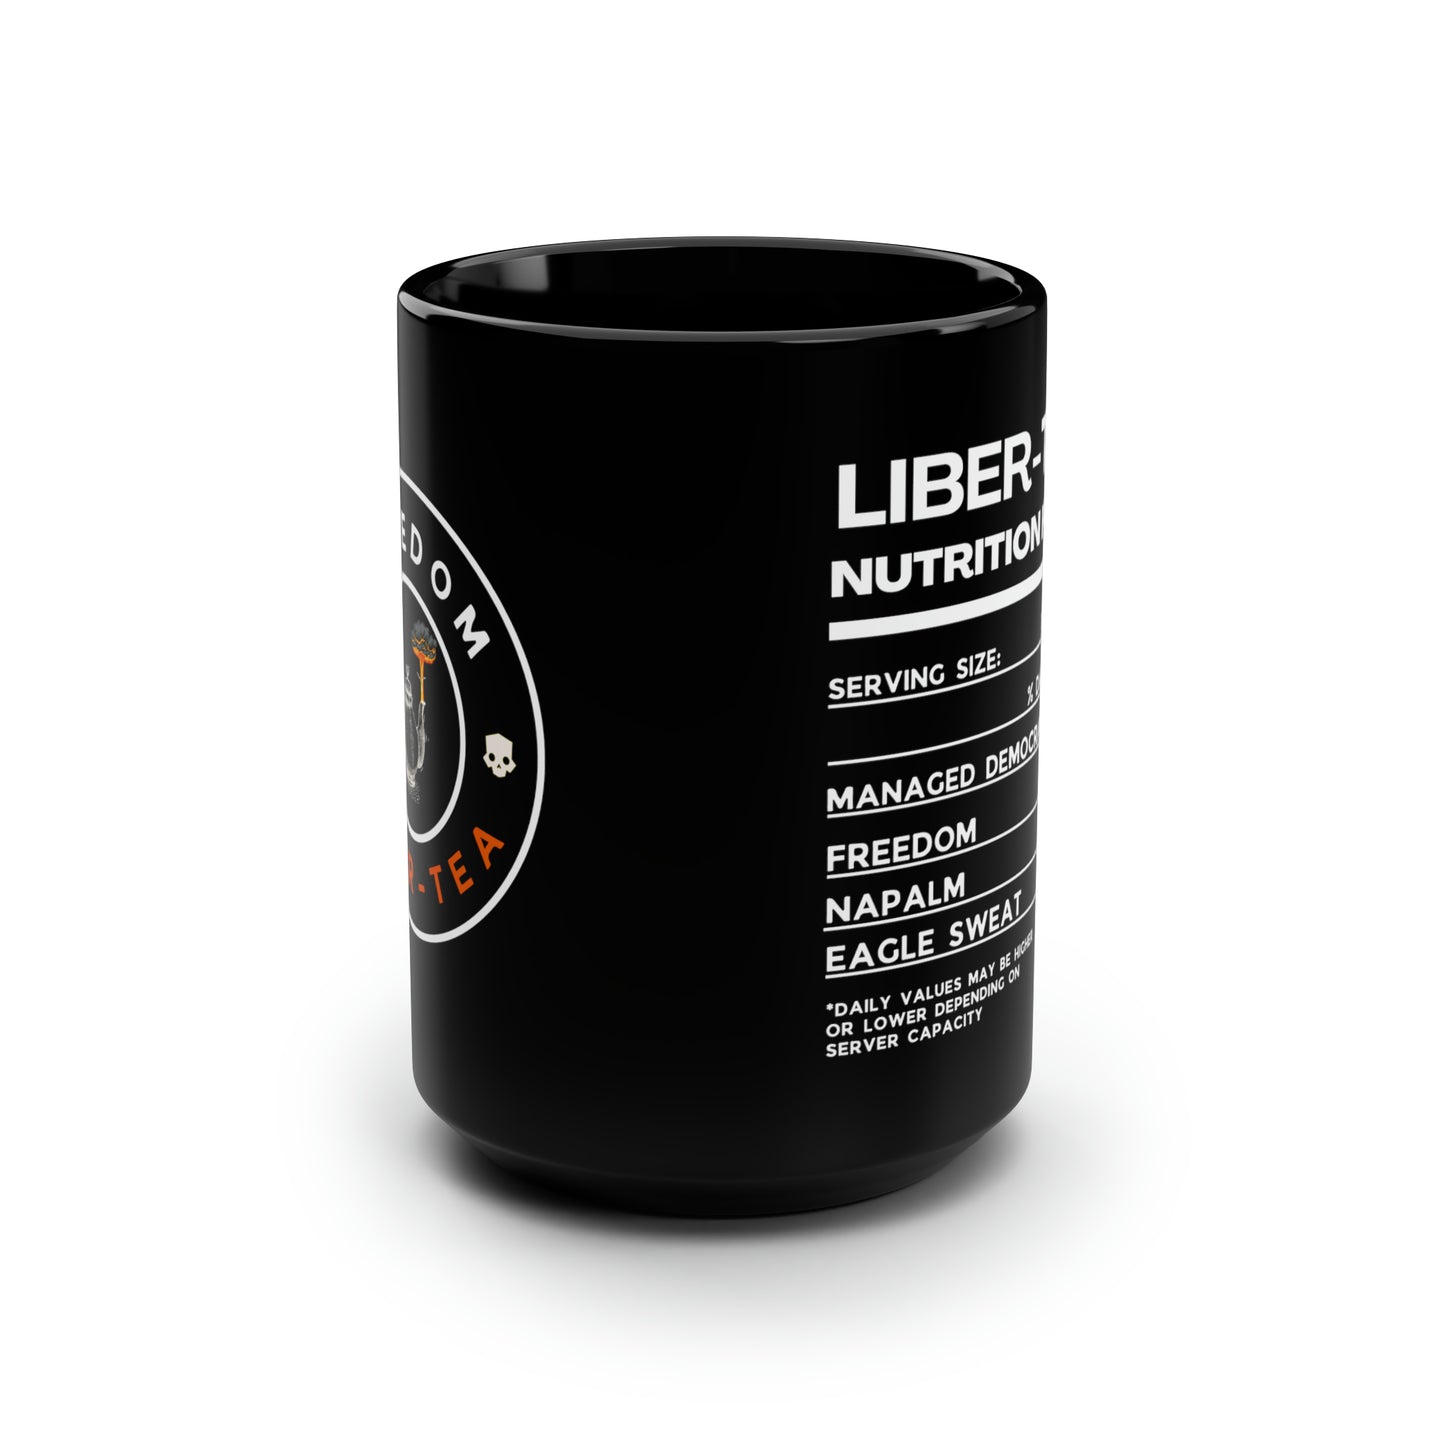 Helldivers 2 Inspired Glossy Black "Liber-Tea Nutrition Facts" Mug